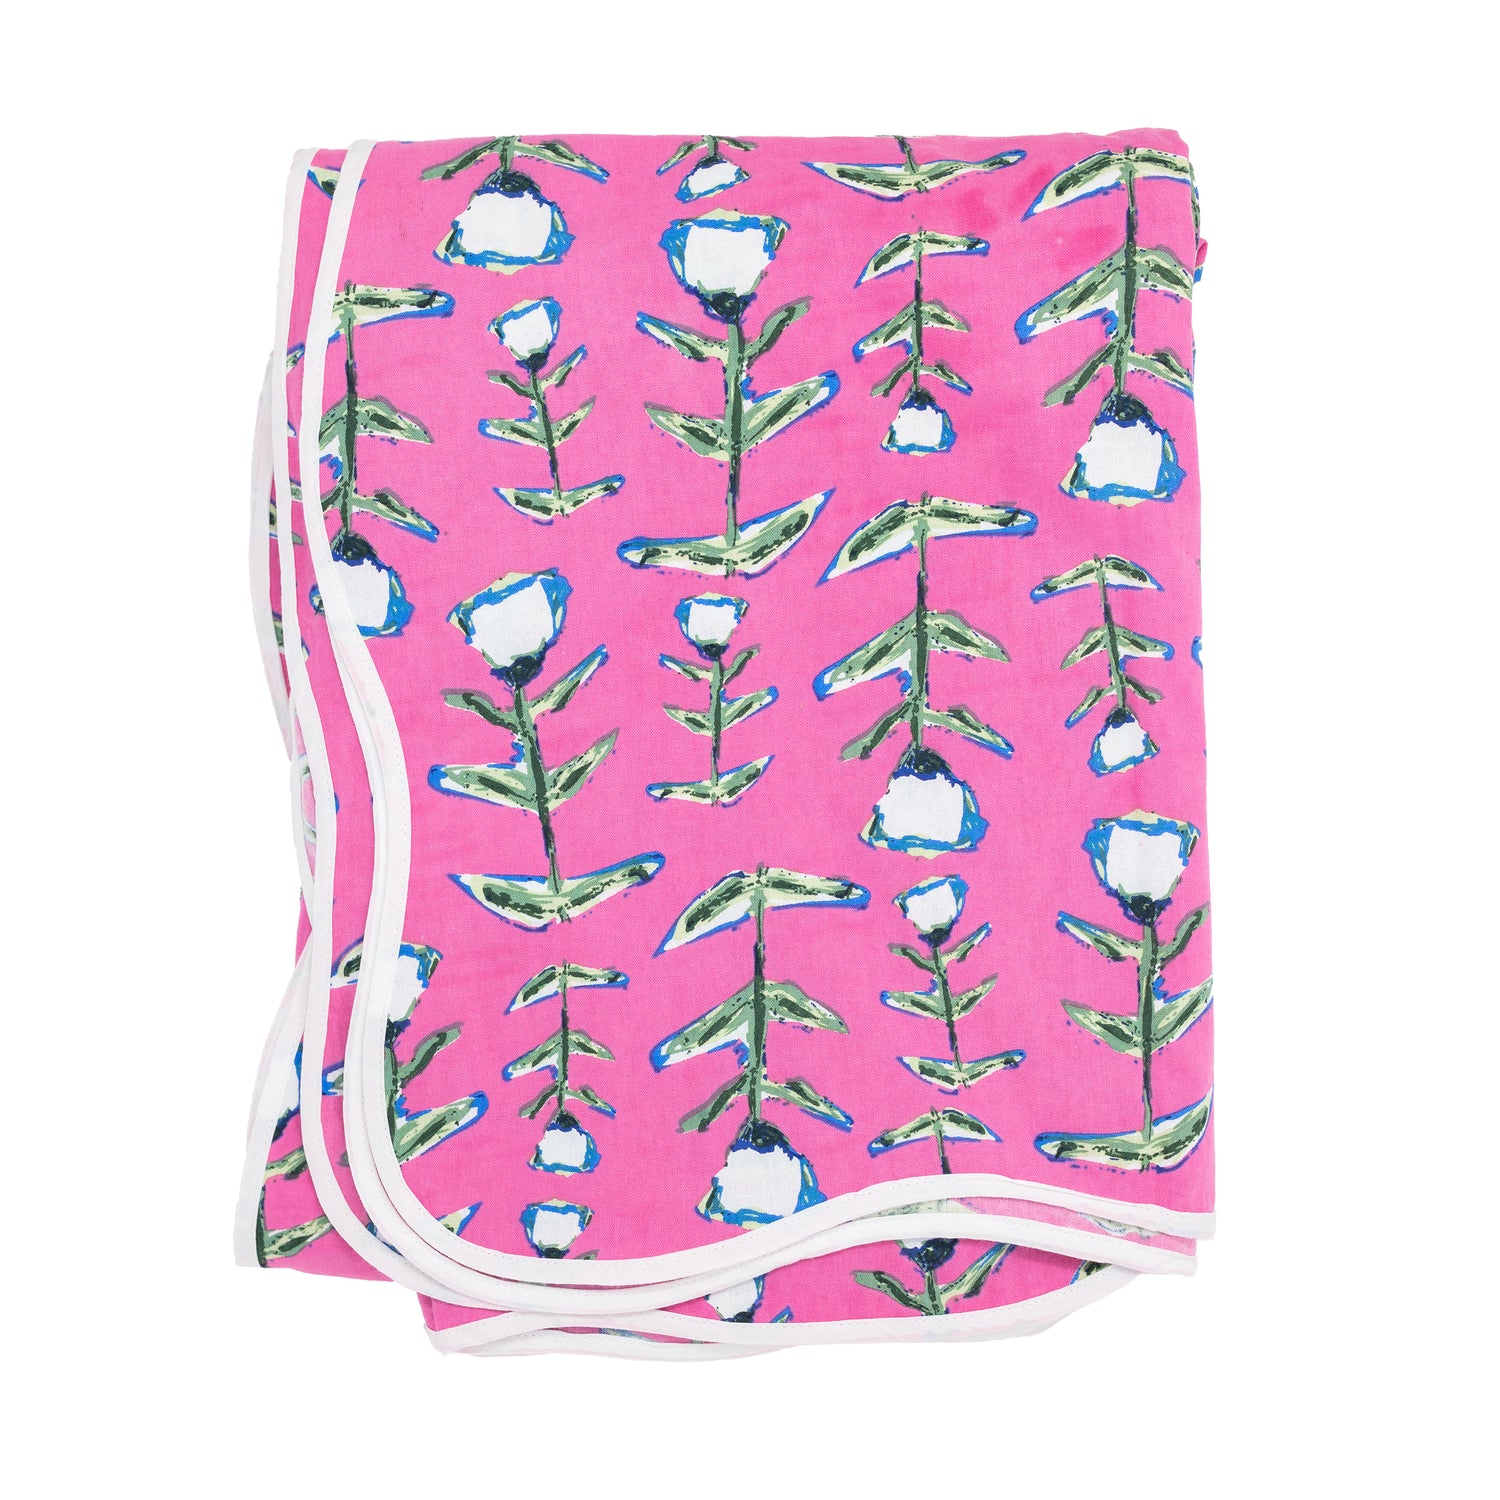 Pink Tulip Tablecloth (Modafleur X Erin Donahue Tice)